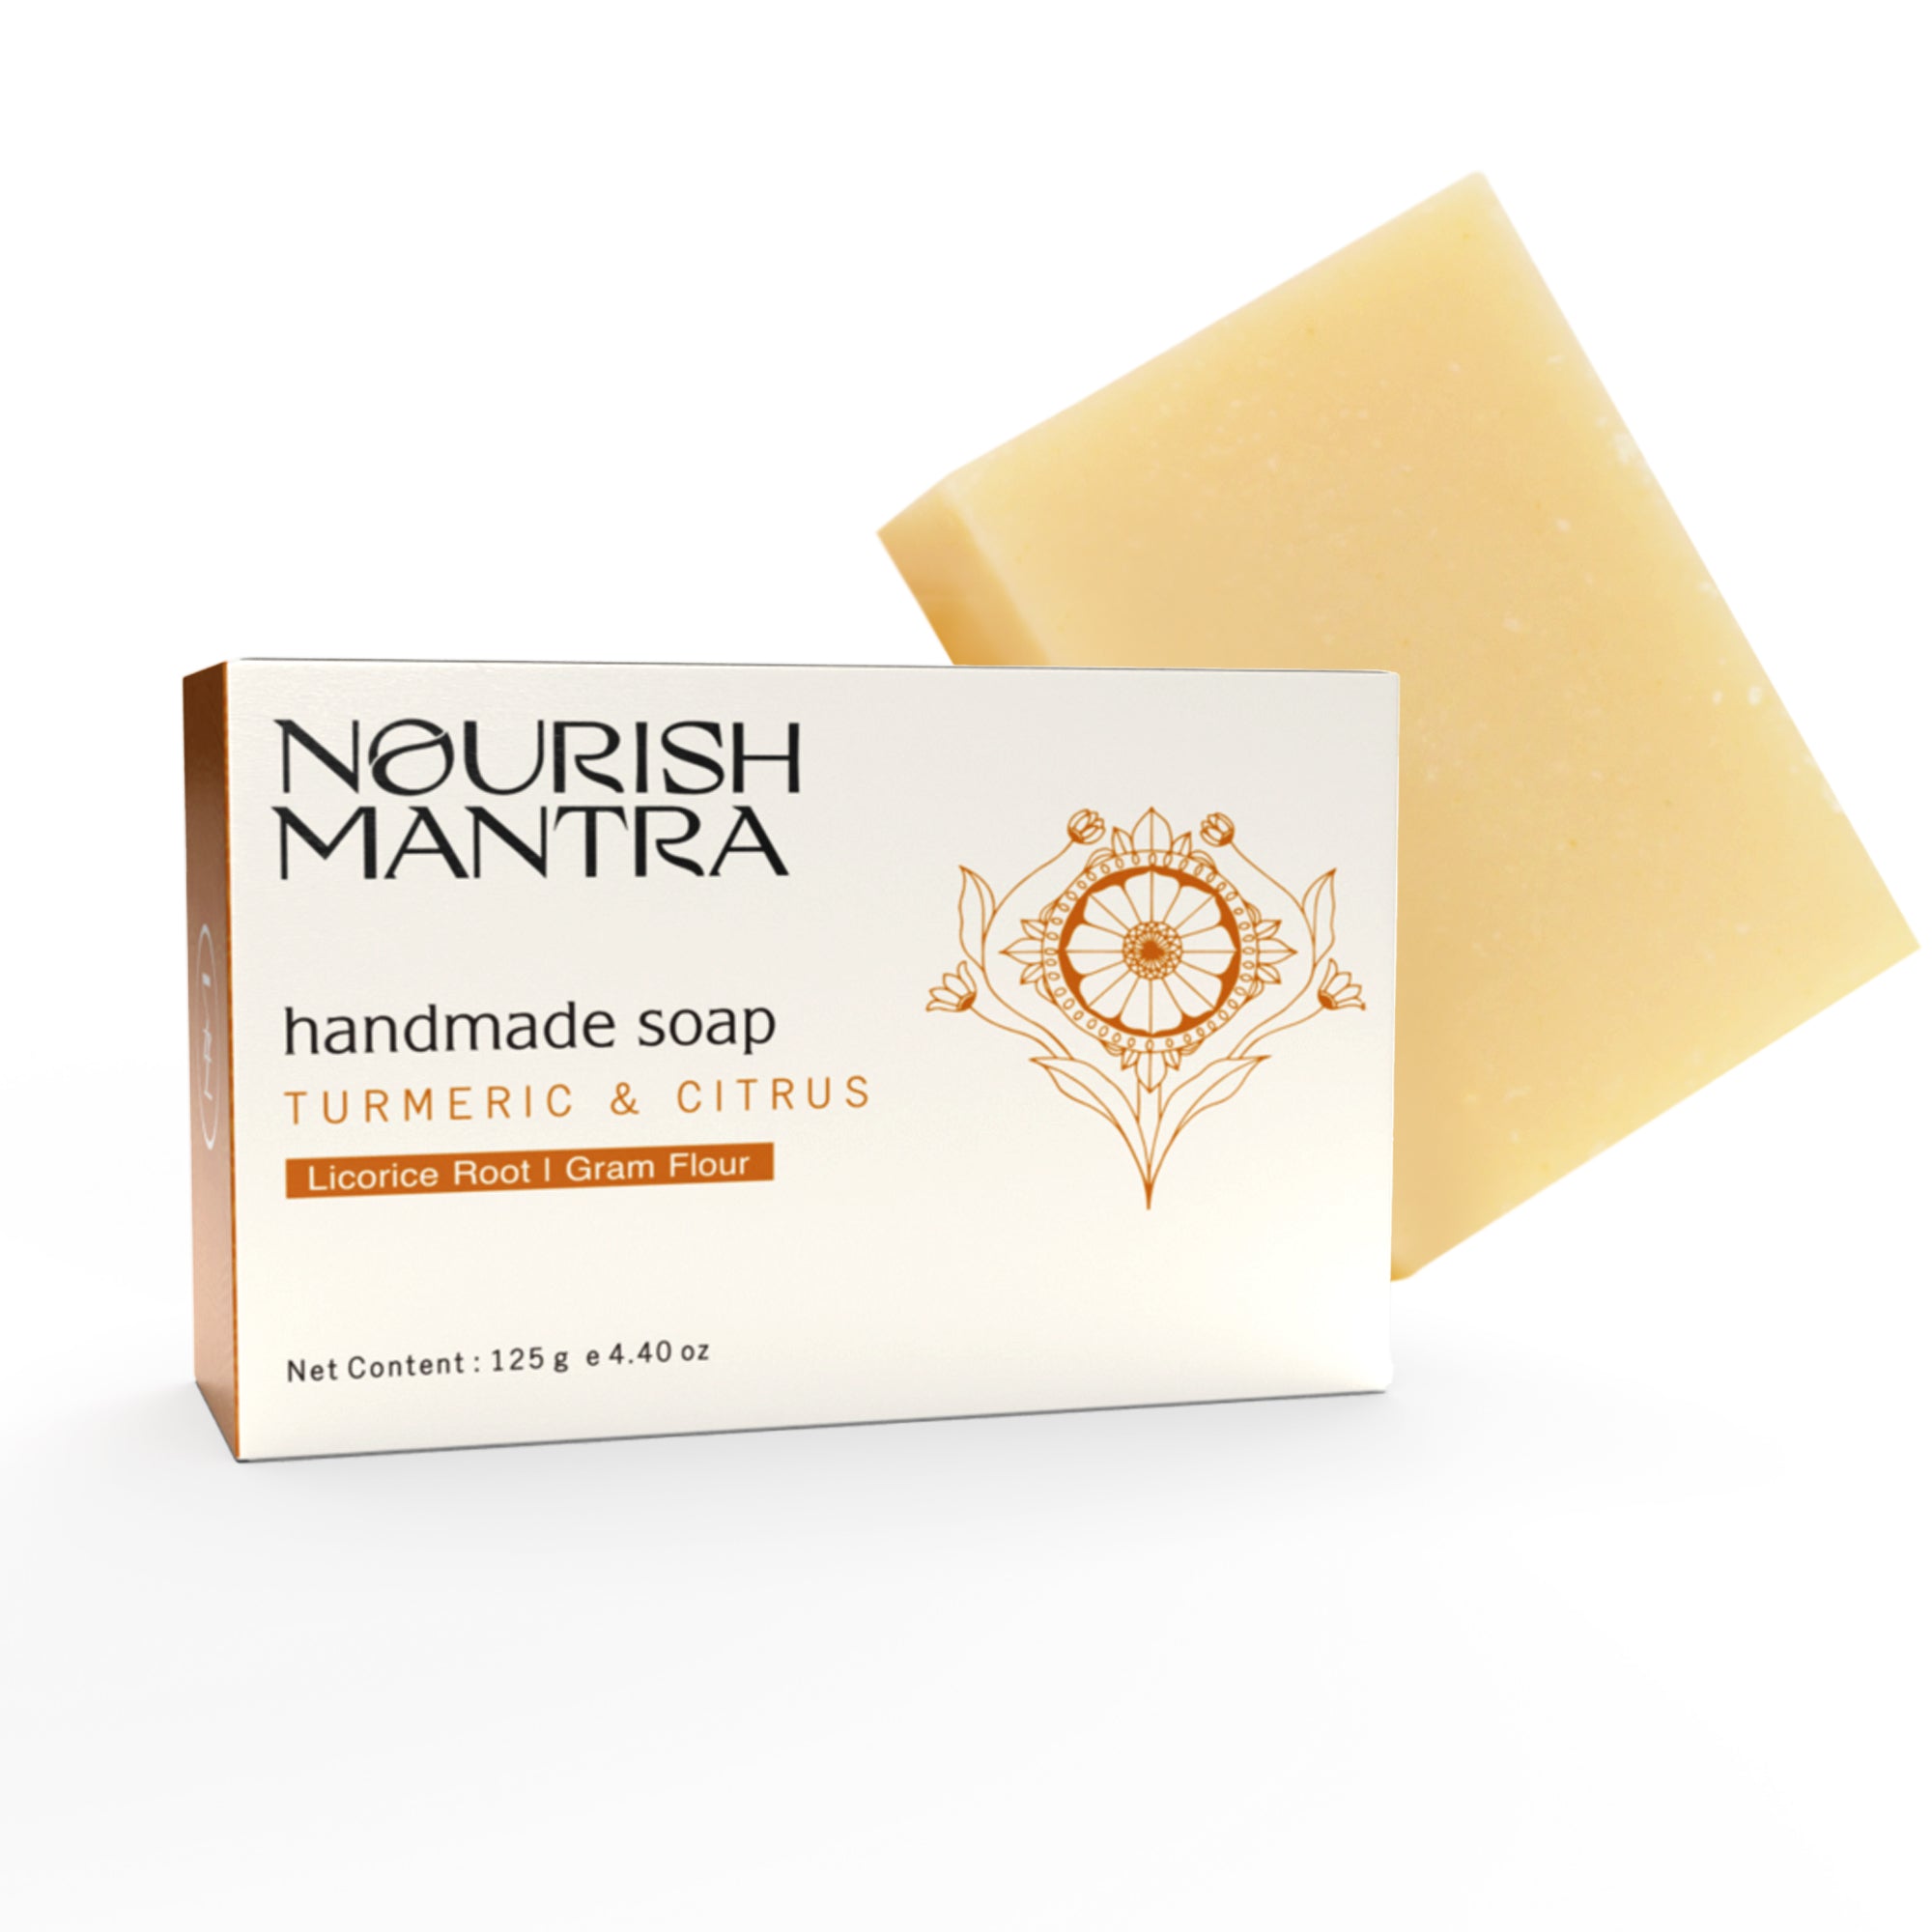 Nourish Mantra Turmeric & Citrus Handmade Bathing Bar Soap (125g)